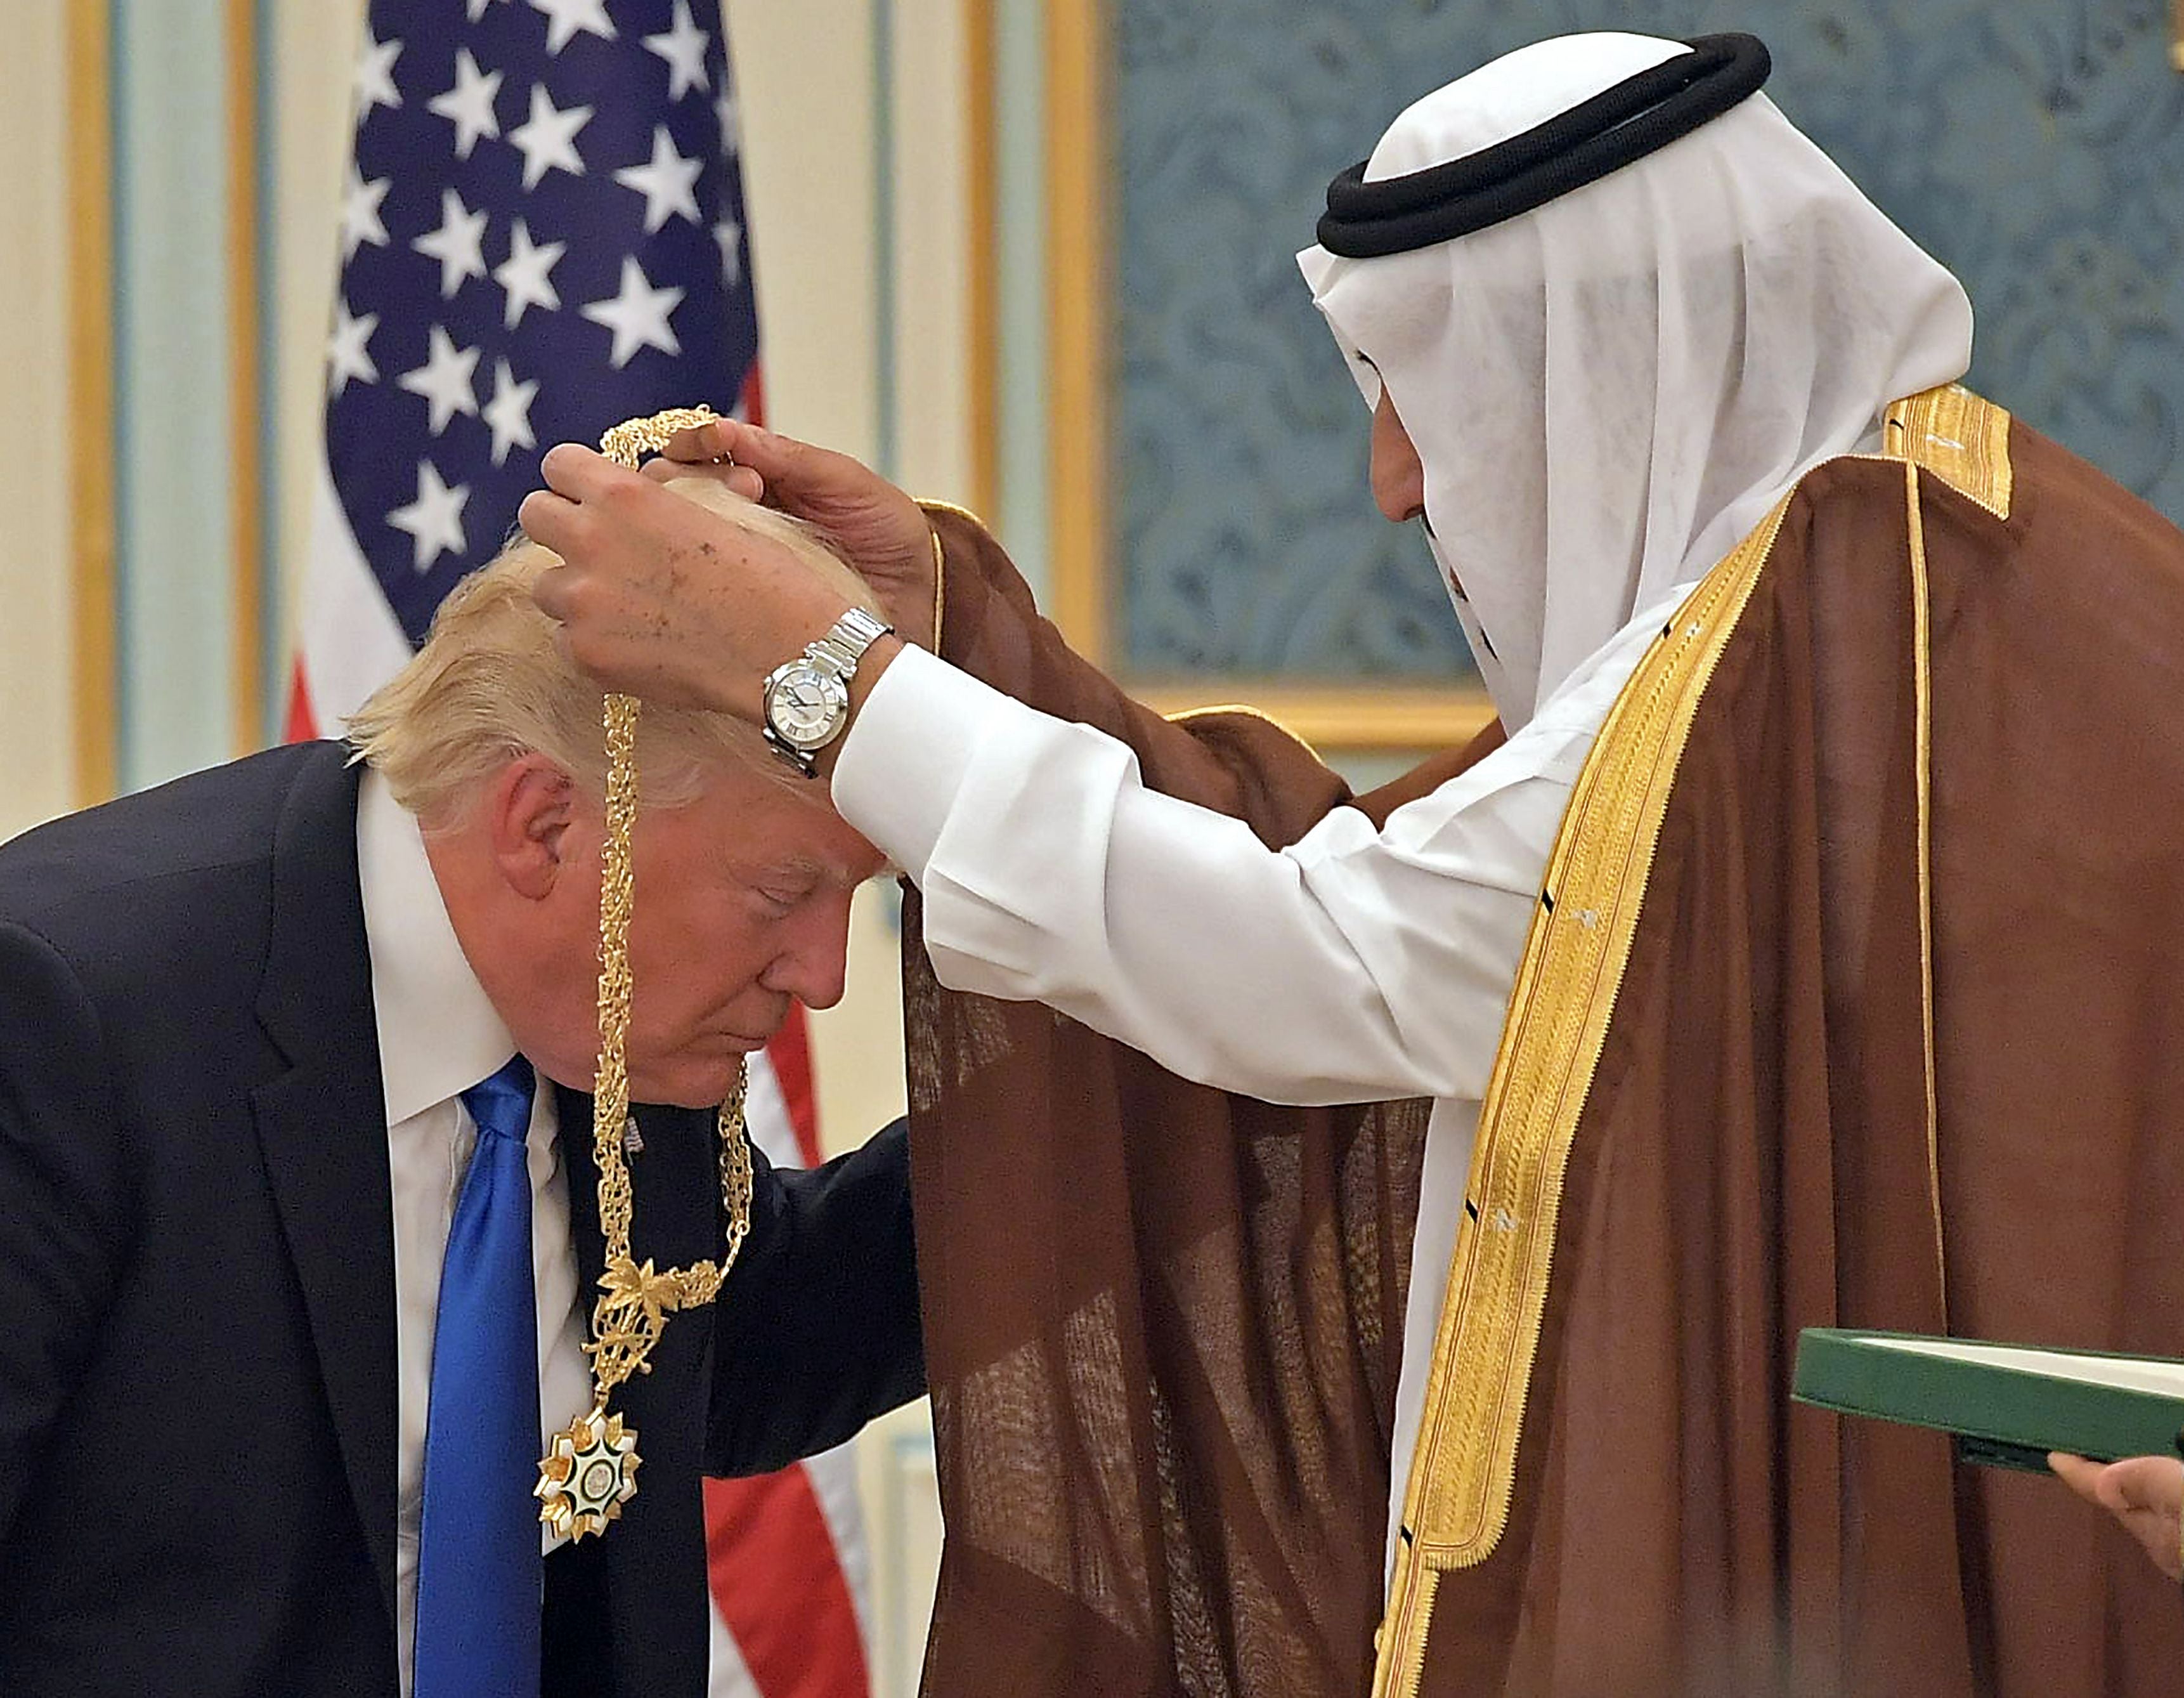 Relations between US and Saudi Arabia were strengthened under Donald Trump